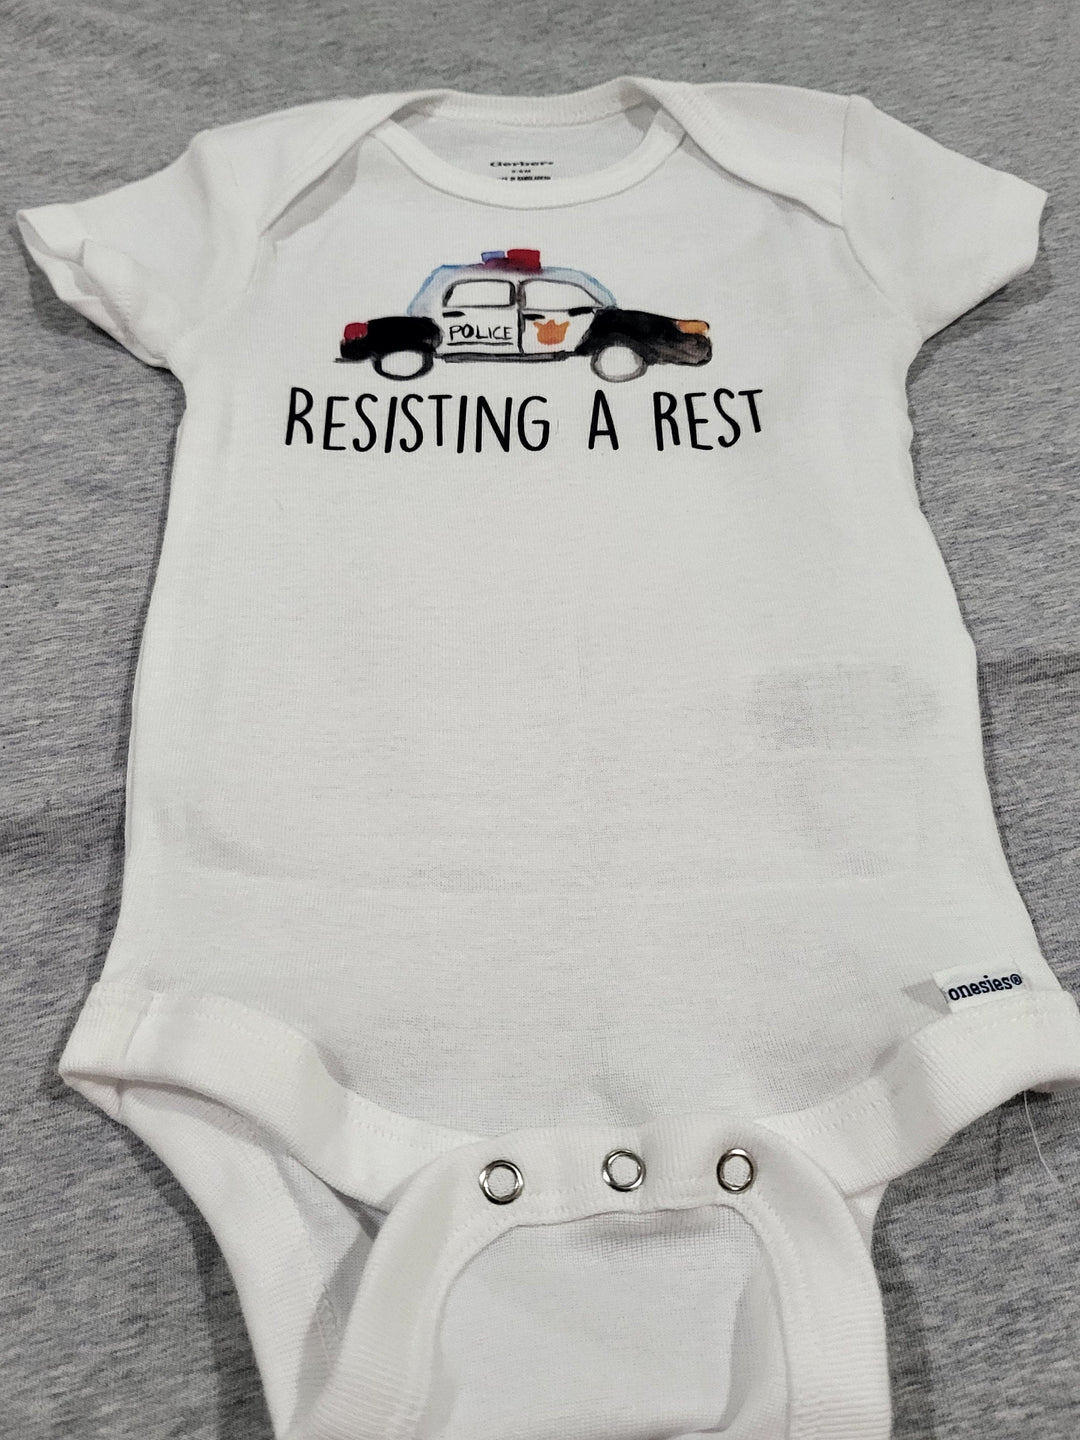 Police Resisting - Baby Boy Girl Clothes Infant Bodysuit Funny Cute Newborn